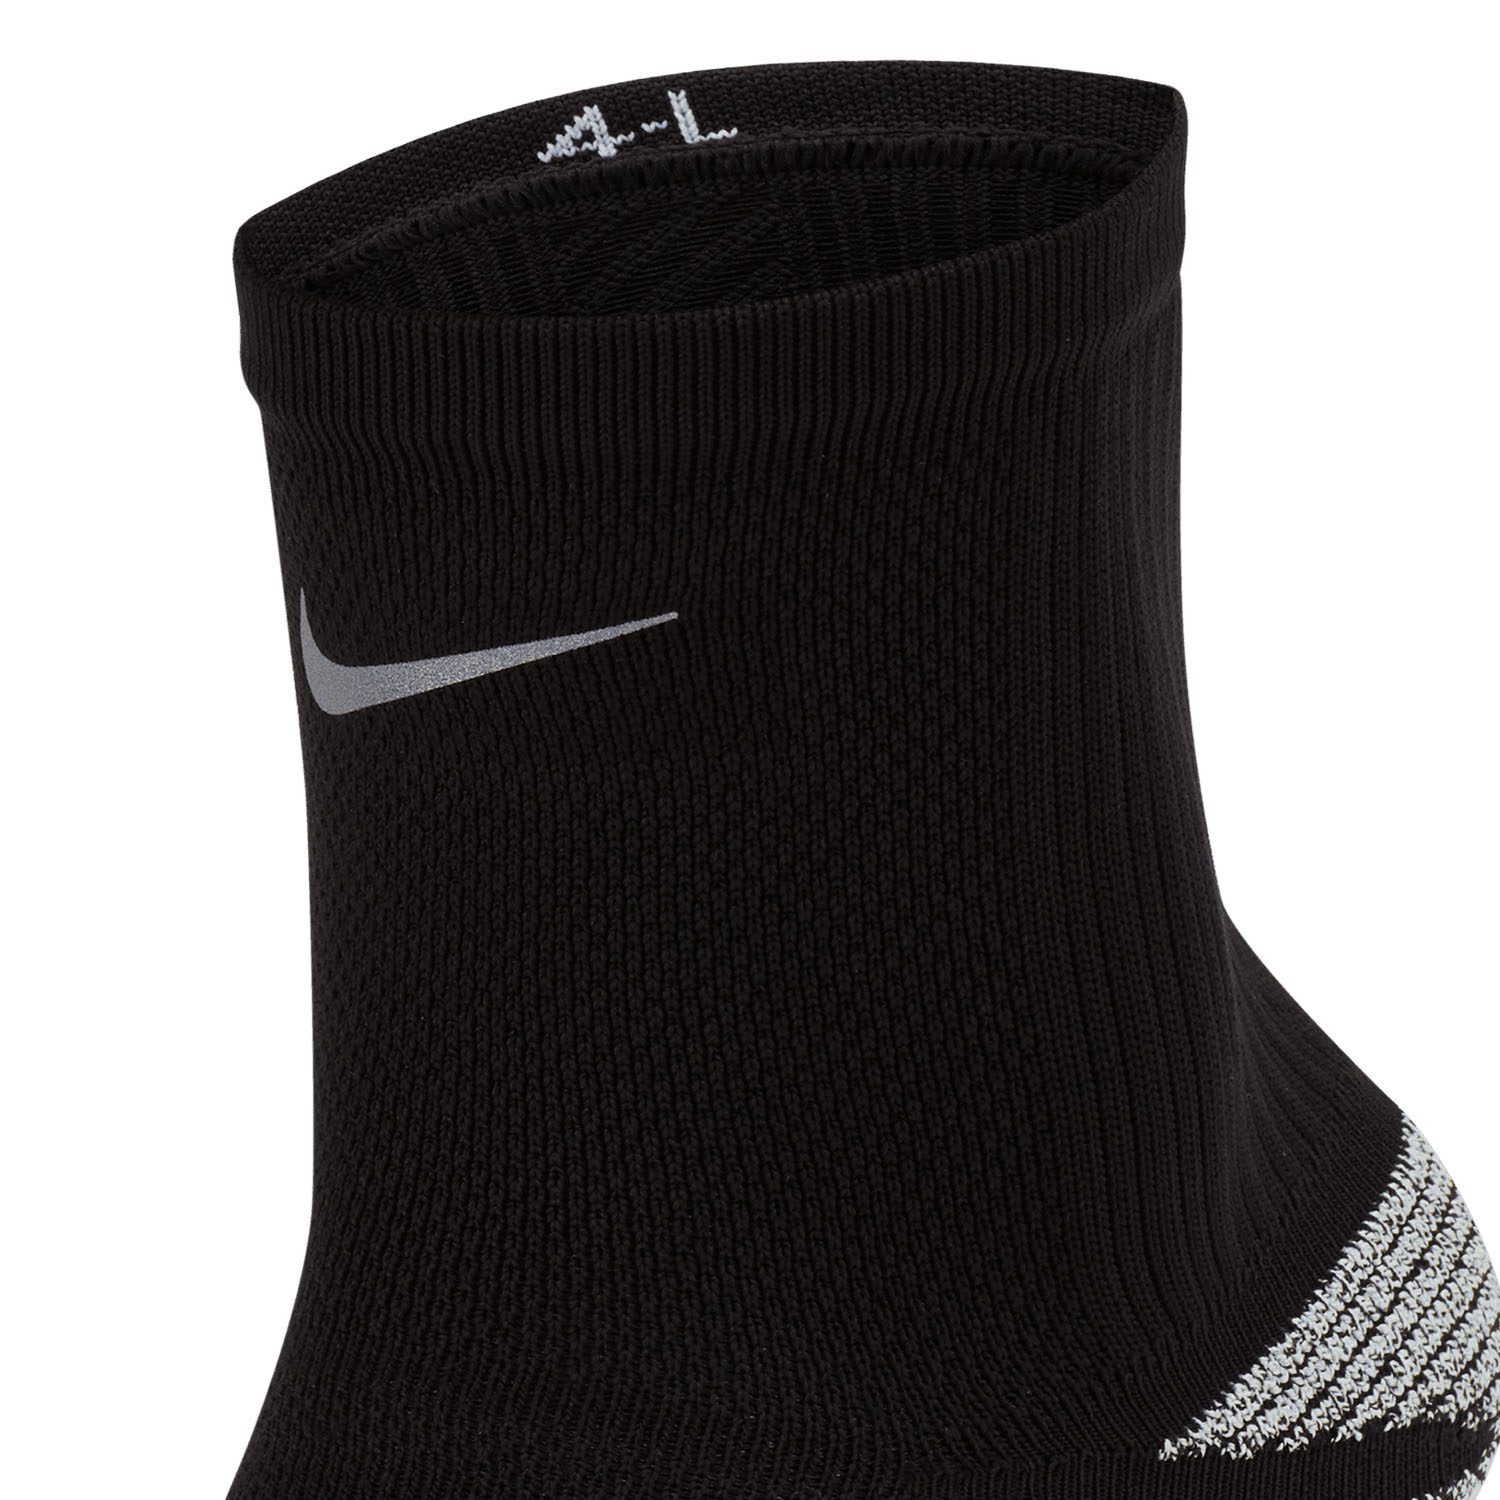 Nike Racing Socks - Black/Reflective Silver